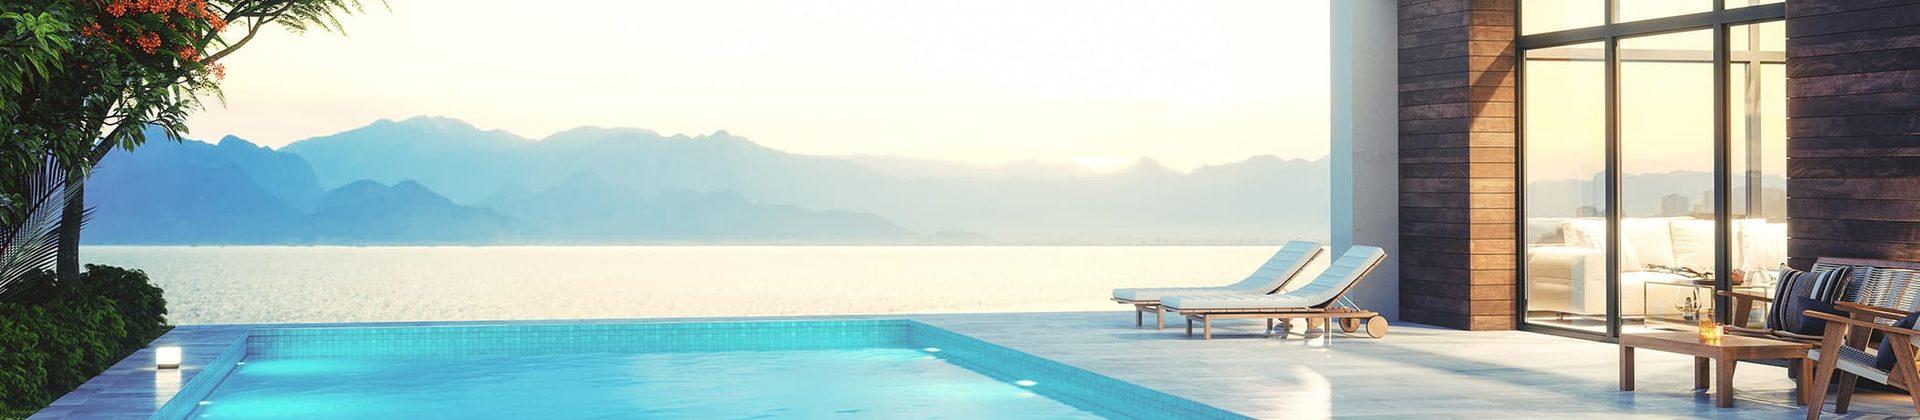 Ferienhaus mit Pool in Sizilien - TUI